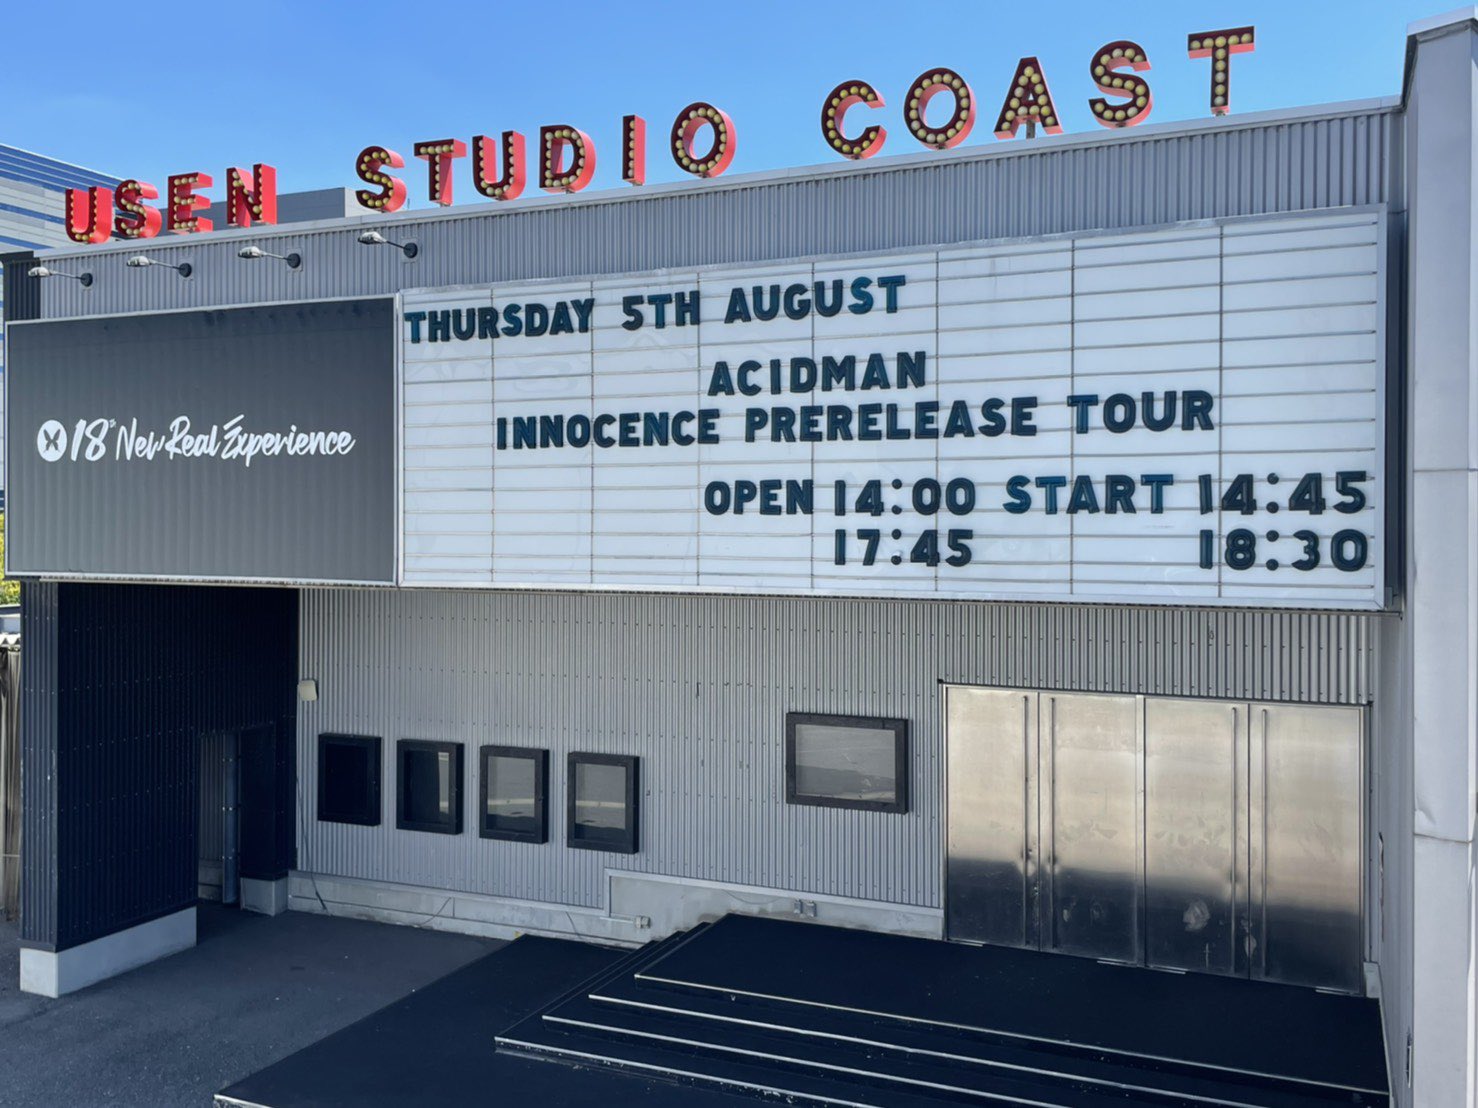 USEN STUDIO COAST on Twitter: "Today's live!! Thursday 5th August 『INNOCENCE』プレリリースツアー #ACIDMAN https://t.co/RkUOq4tcAv" / Twitter